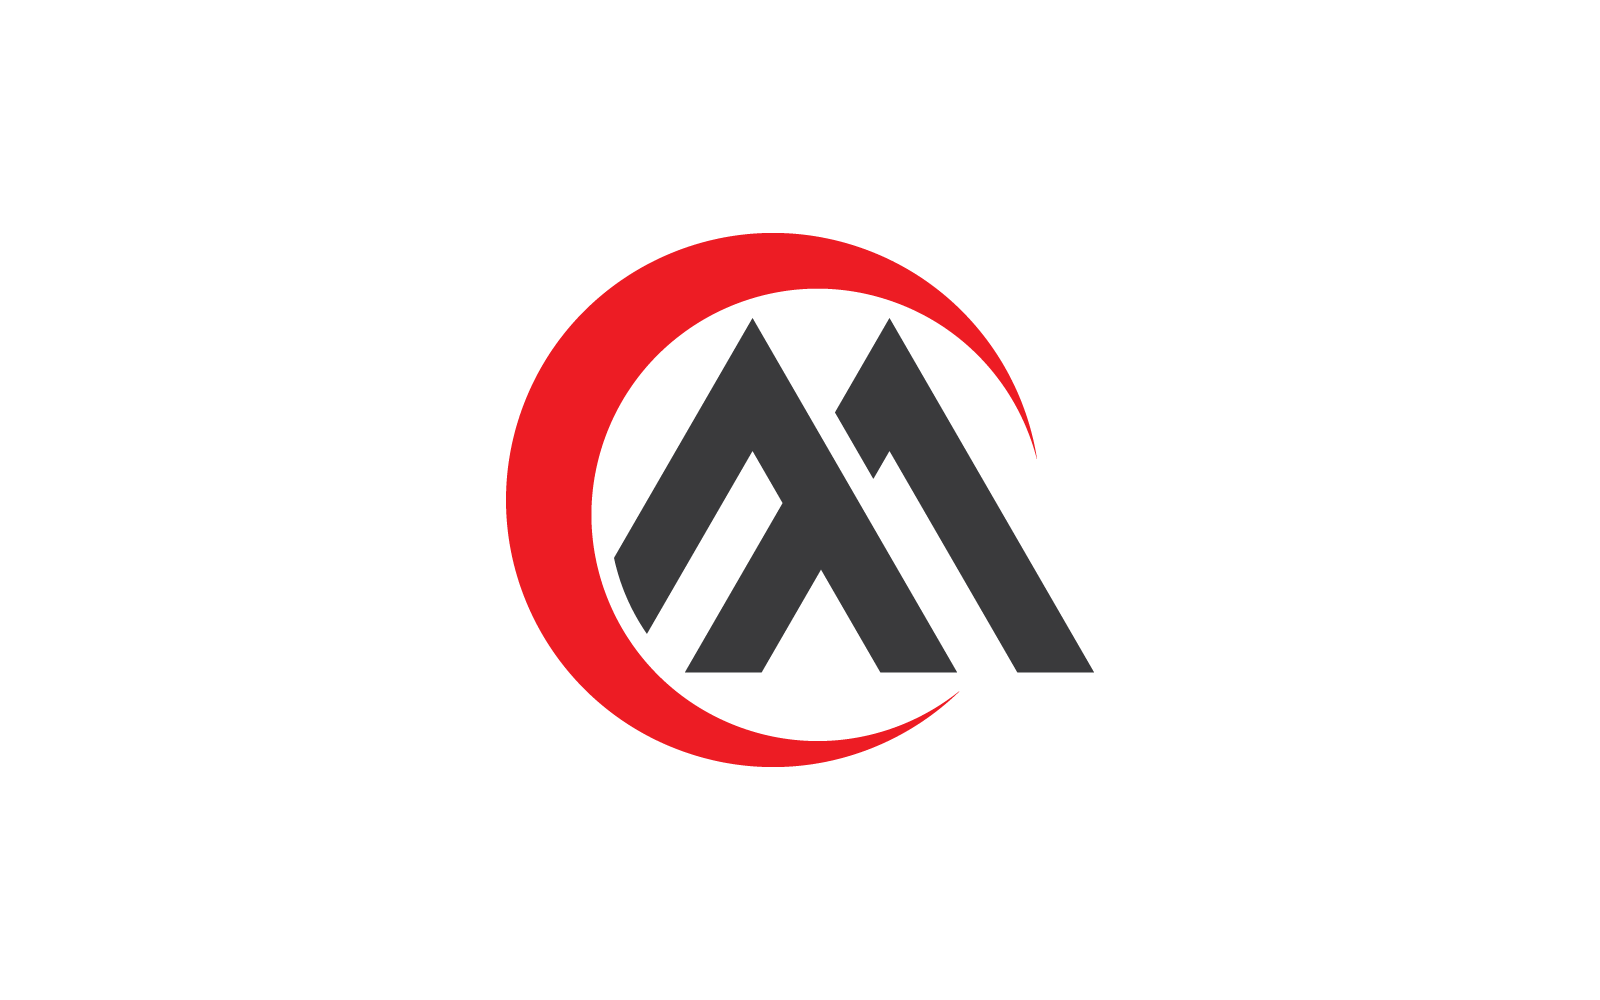 A initial ,M letter logo vector flat design